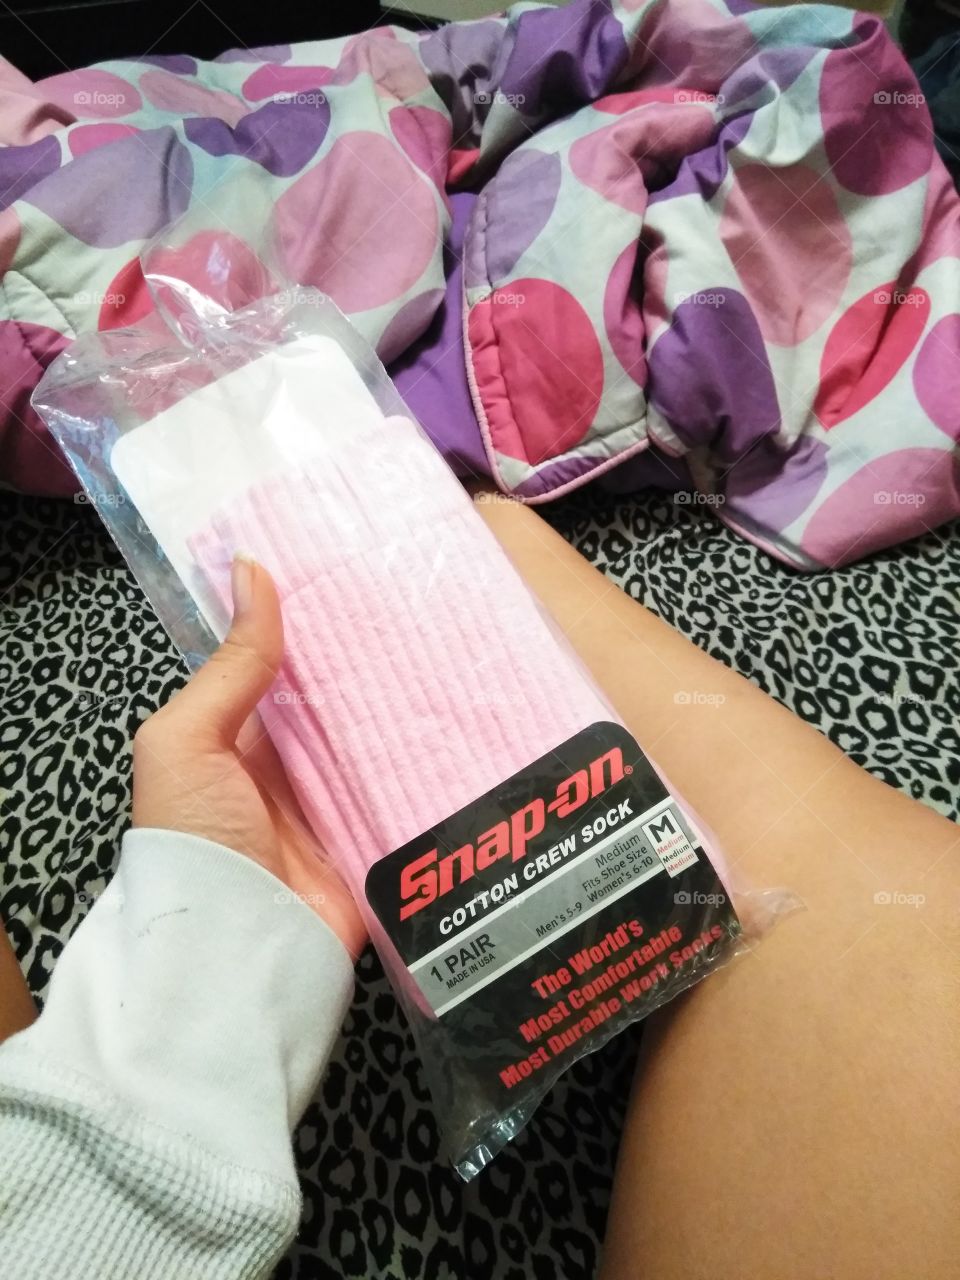 My pink Snap on socks.
warmest socks ever!